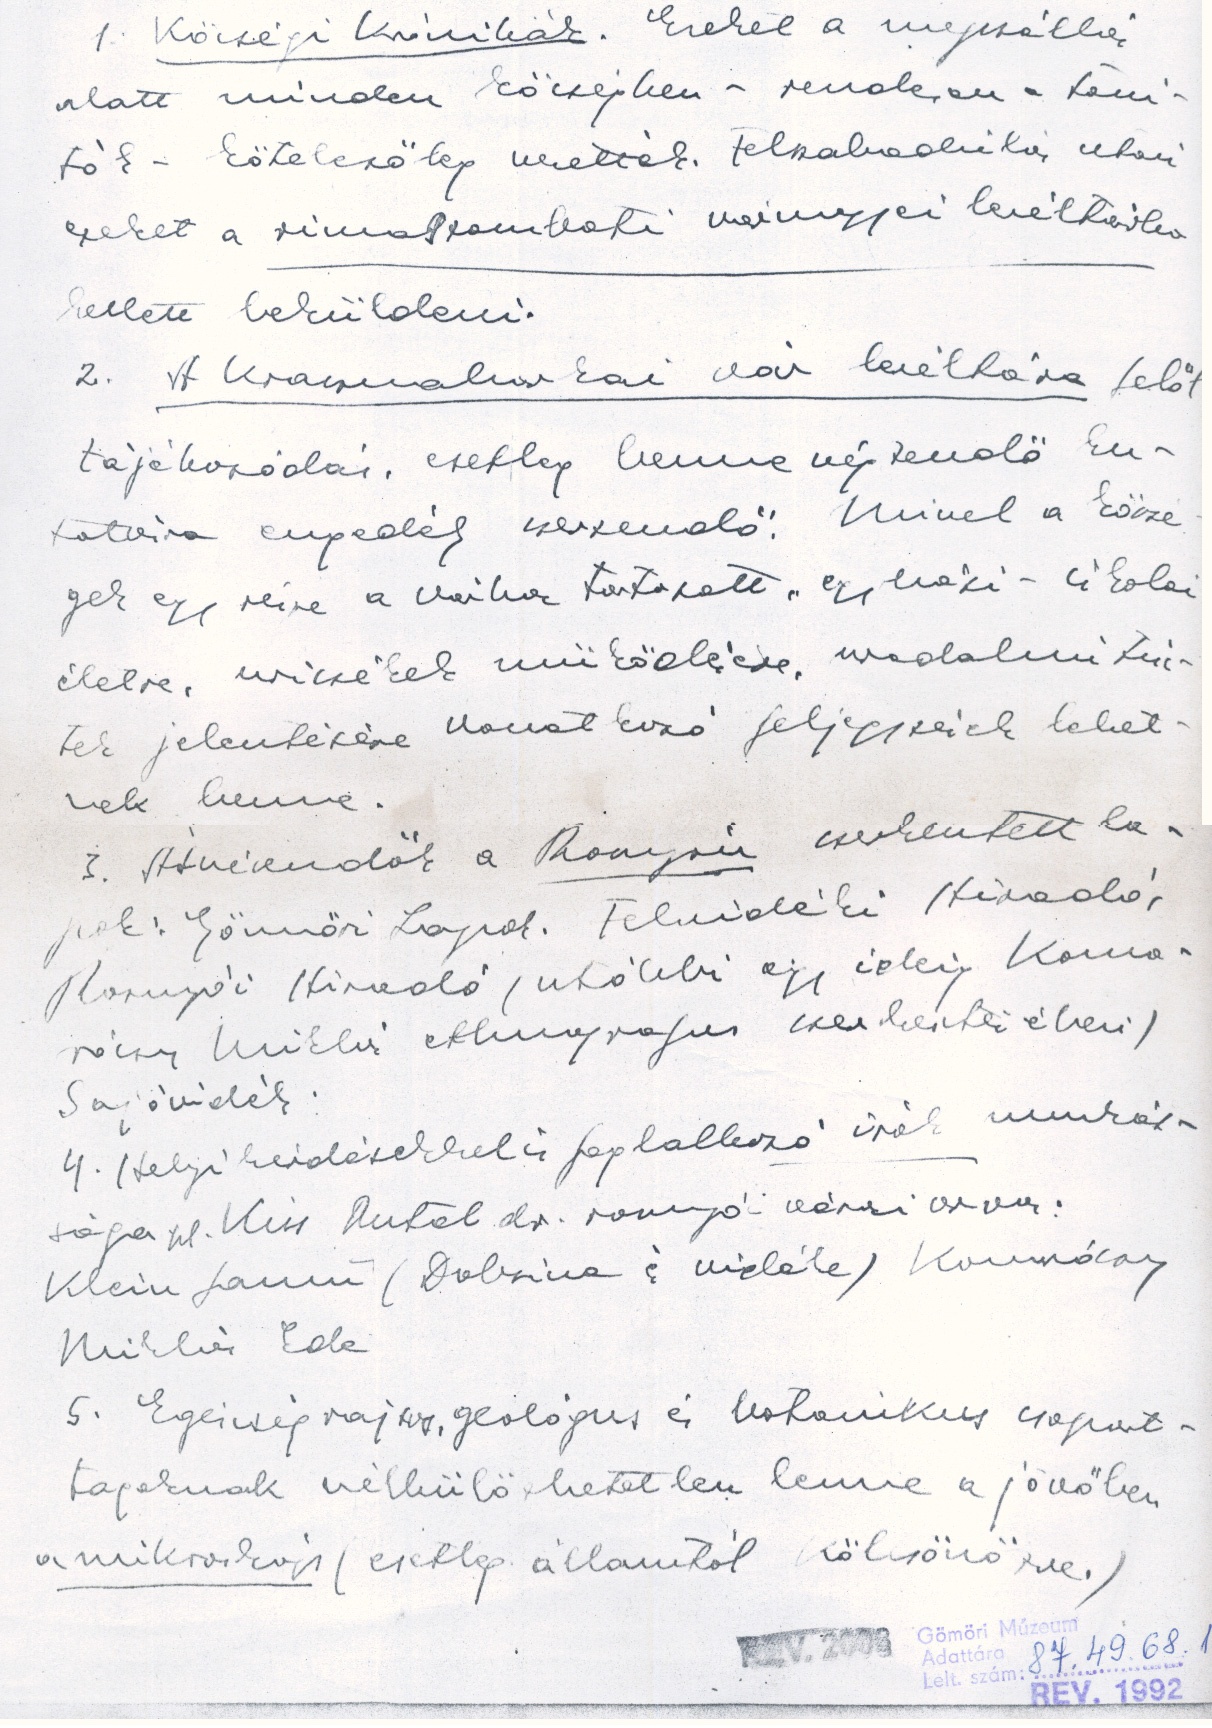 Dernôi Munkaközösség. Adatok Dernô monográfiájához 1940 (Gömöri Múzeum, Putnok CC BY-NC-SA)